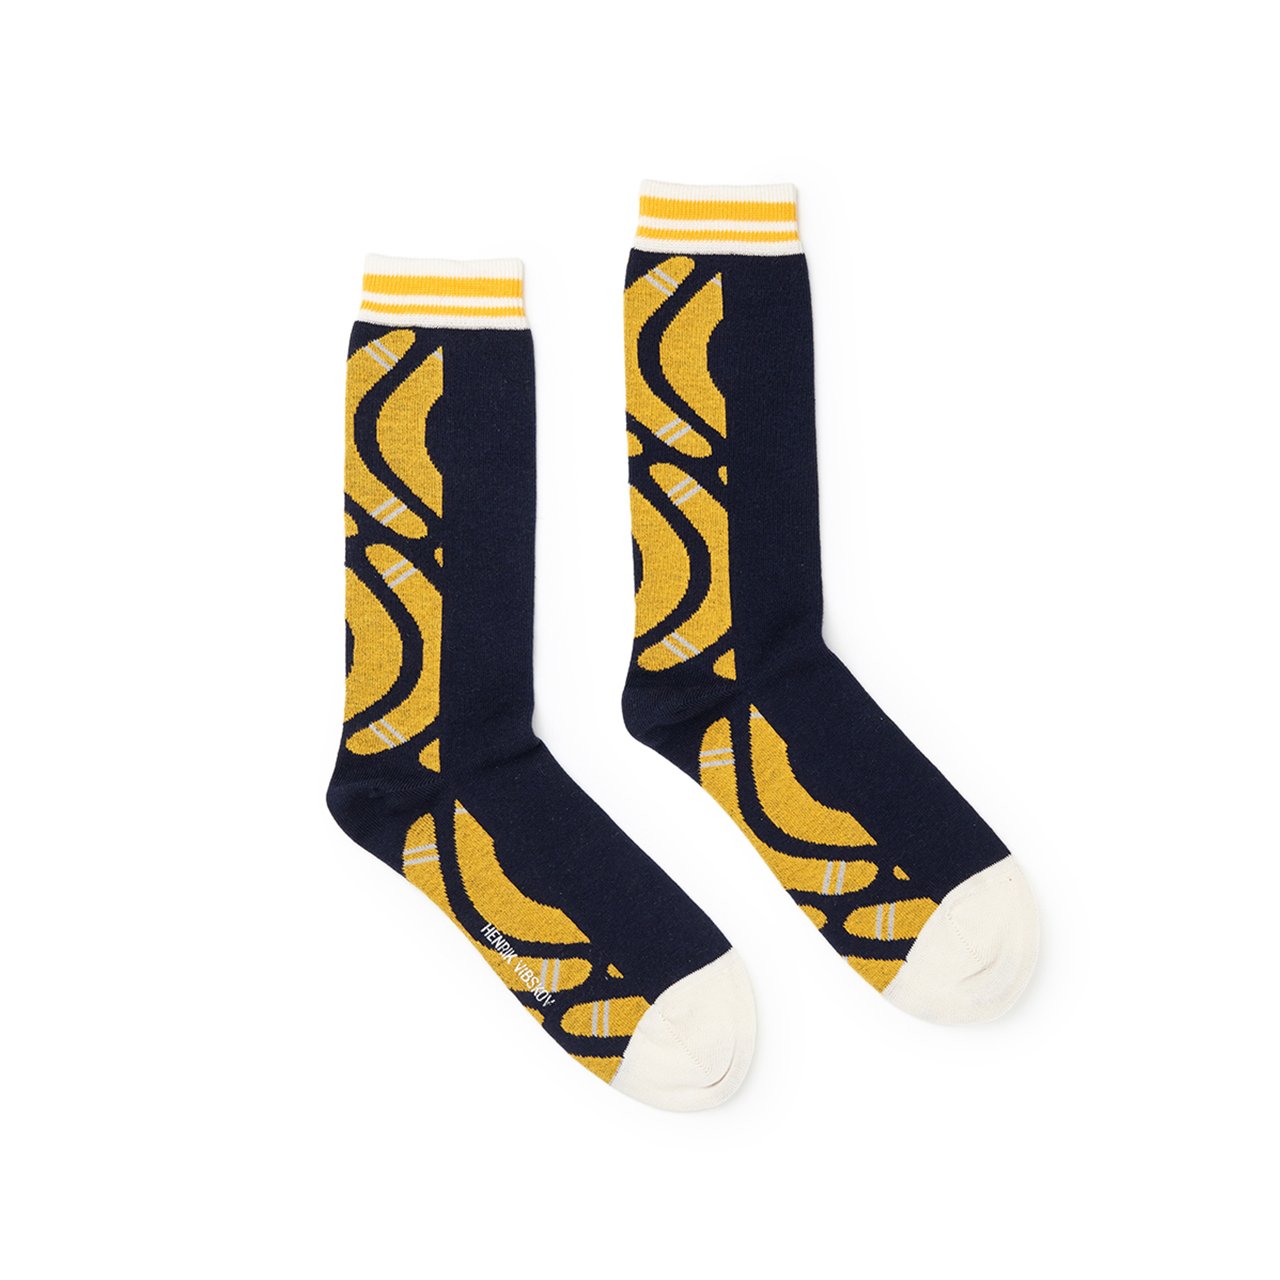 henrik vibskov boomerang back socks (black / yellow) - ss19-s904 - a.plus - Image - 1